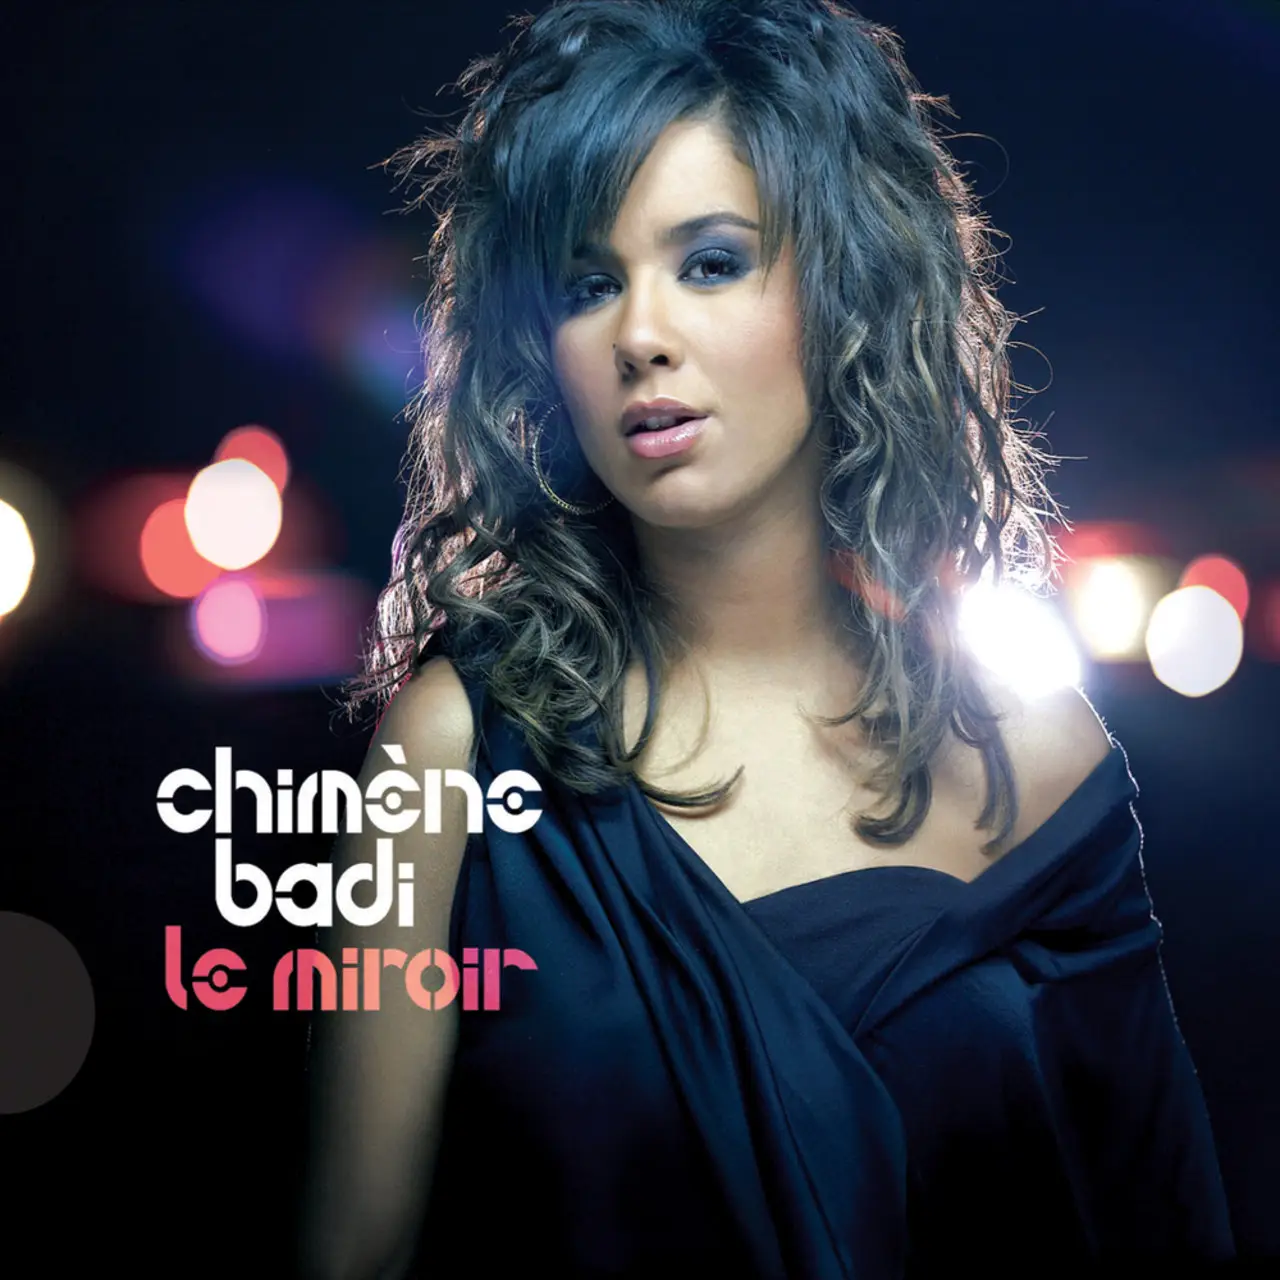 Ю бади песня. Chimene. Чимене БАДИ.. Chimène Badi альбом le miroir. Chimene Badi фото.